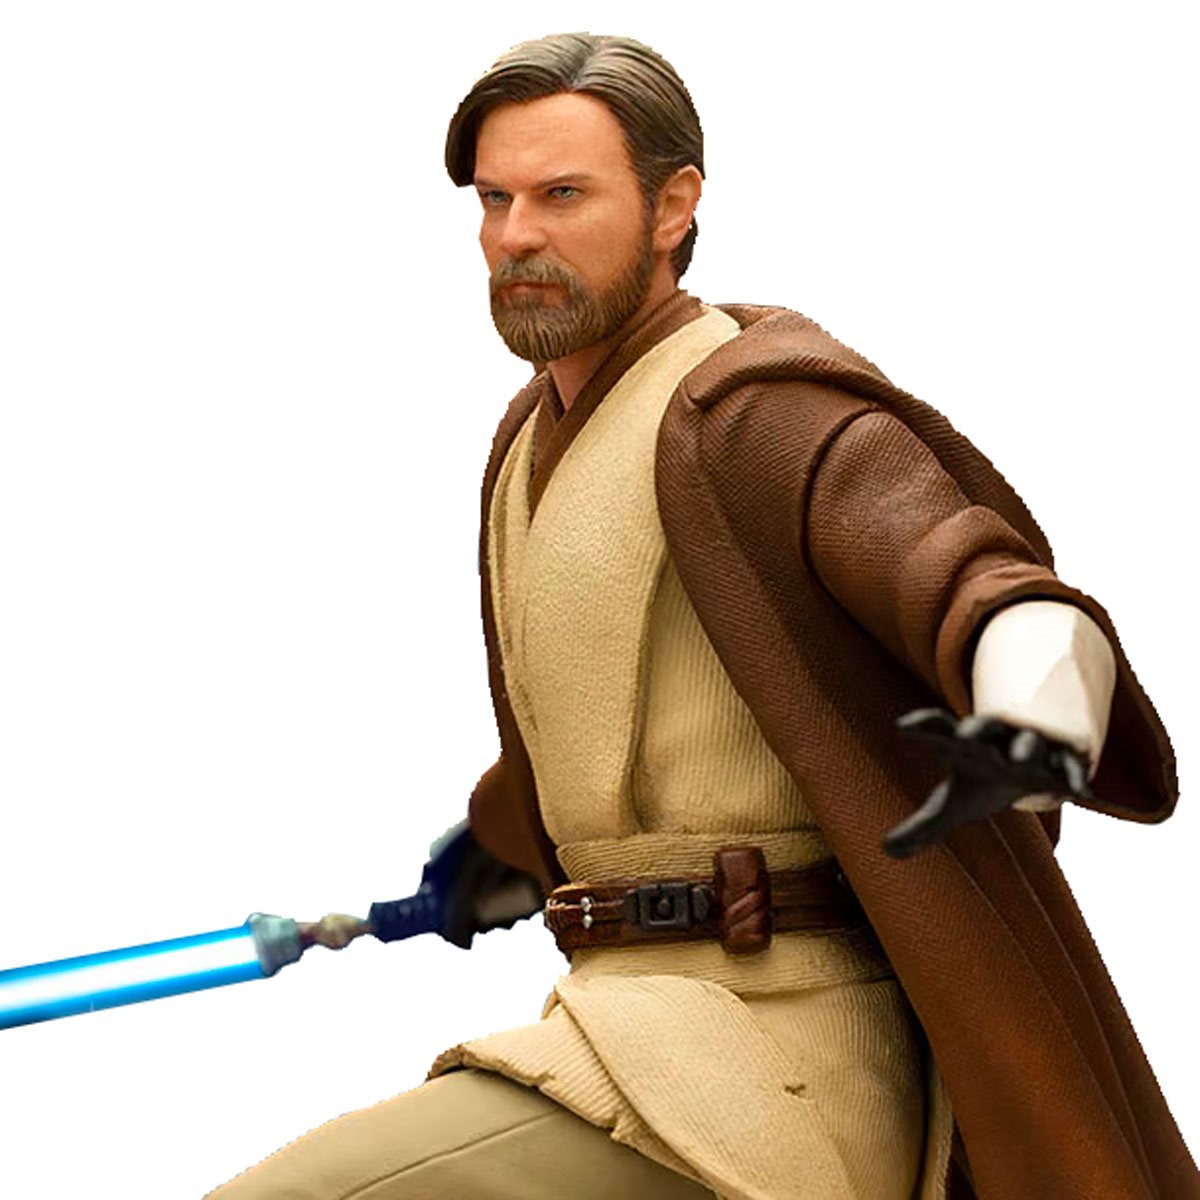 Star Wars: Obi-Wan Kenobi BDS Art 1:10 Scale Statue画像